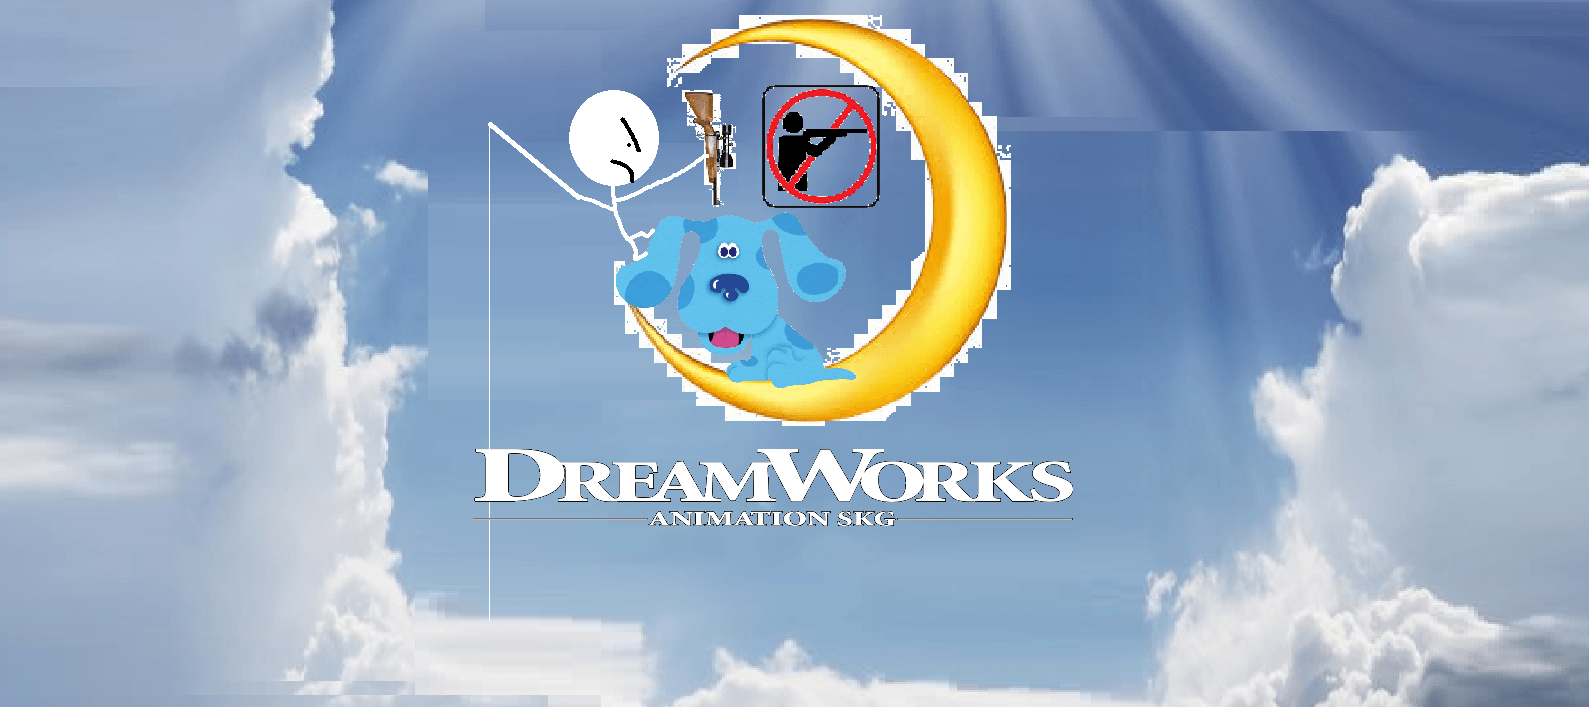 DreamWorks Animation Logo - DreamWorks Animation logo (Blue's Clues).png